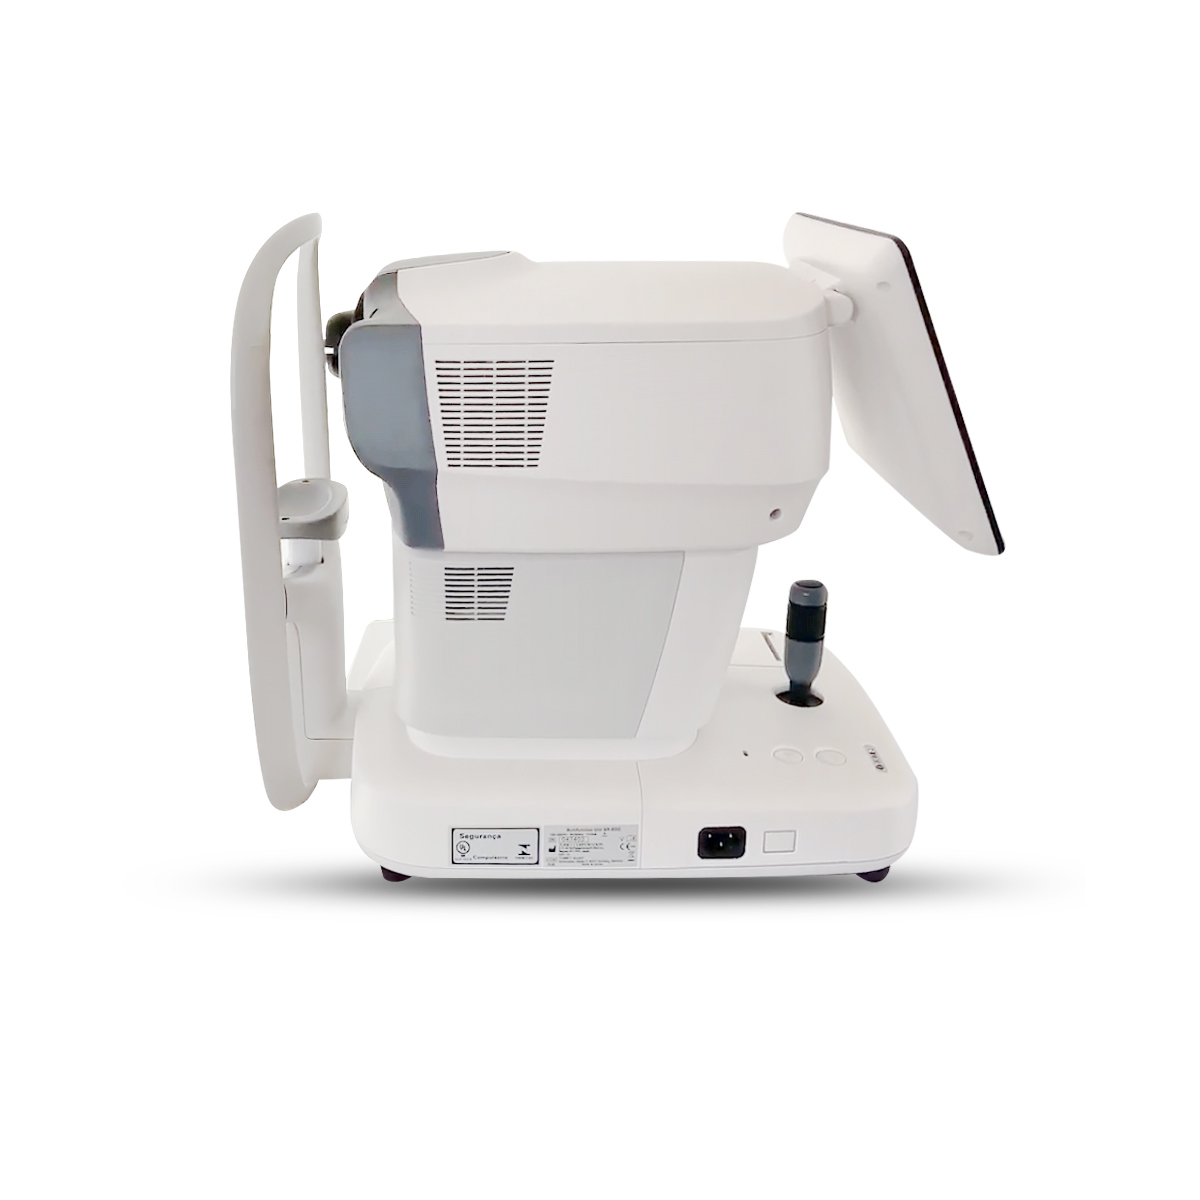 Auto Refractometer Auto Refractor Optometry with Keratometer Registered in  FDA : : Tools & Home Improvement